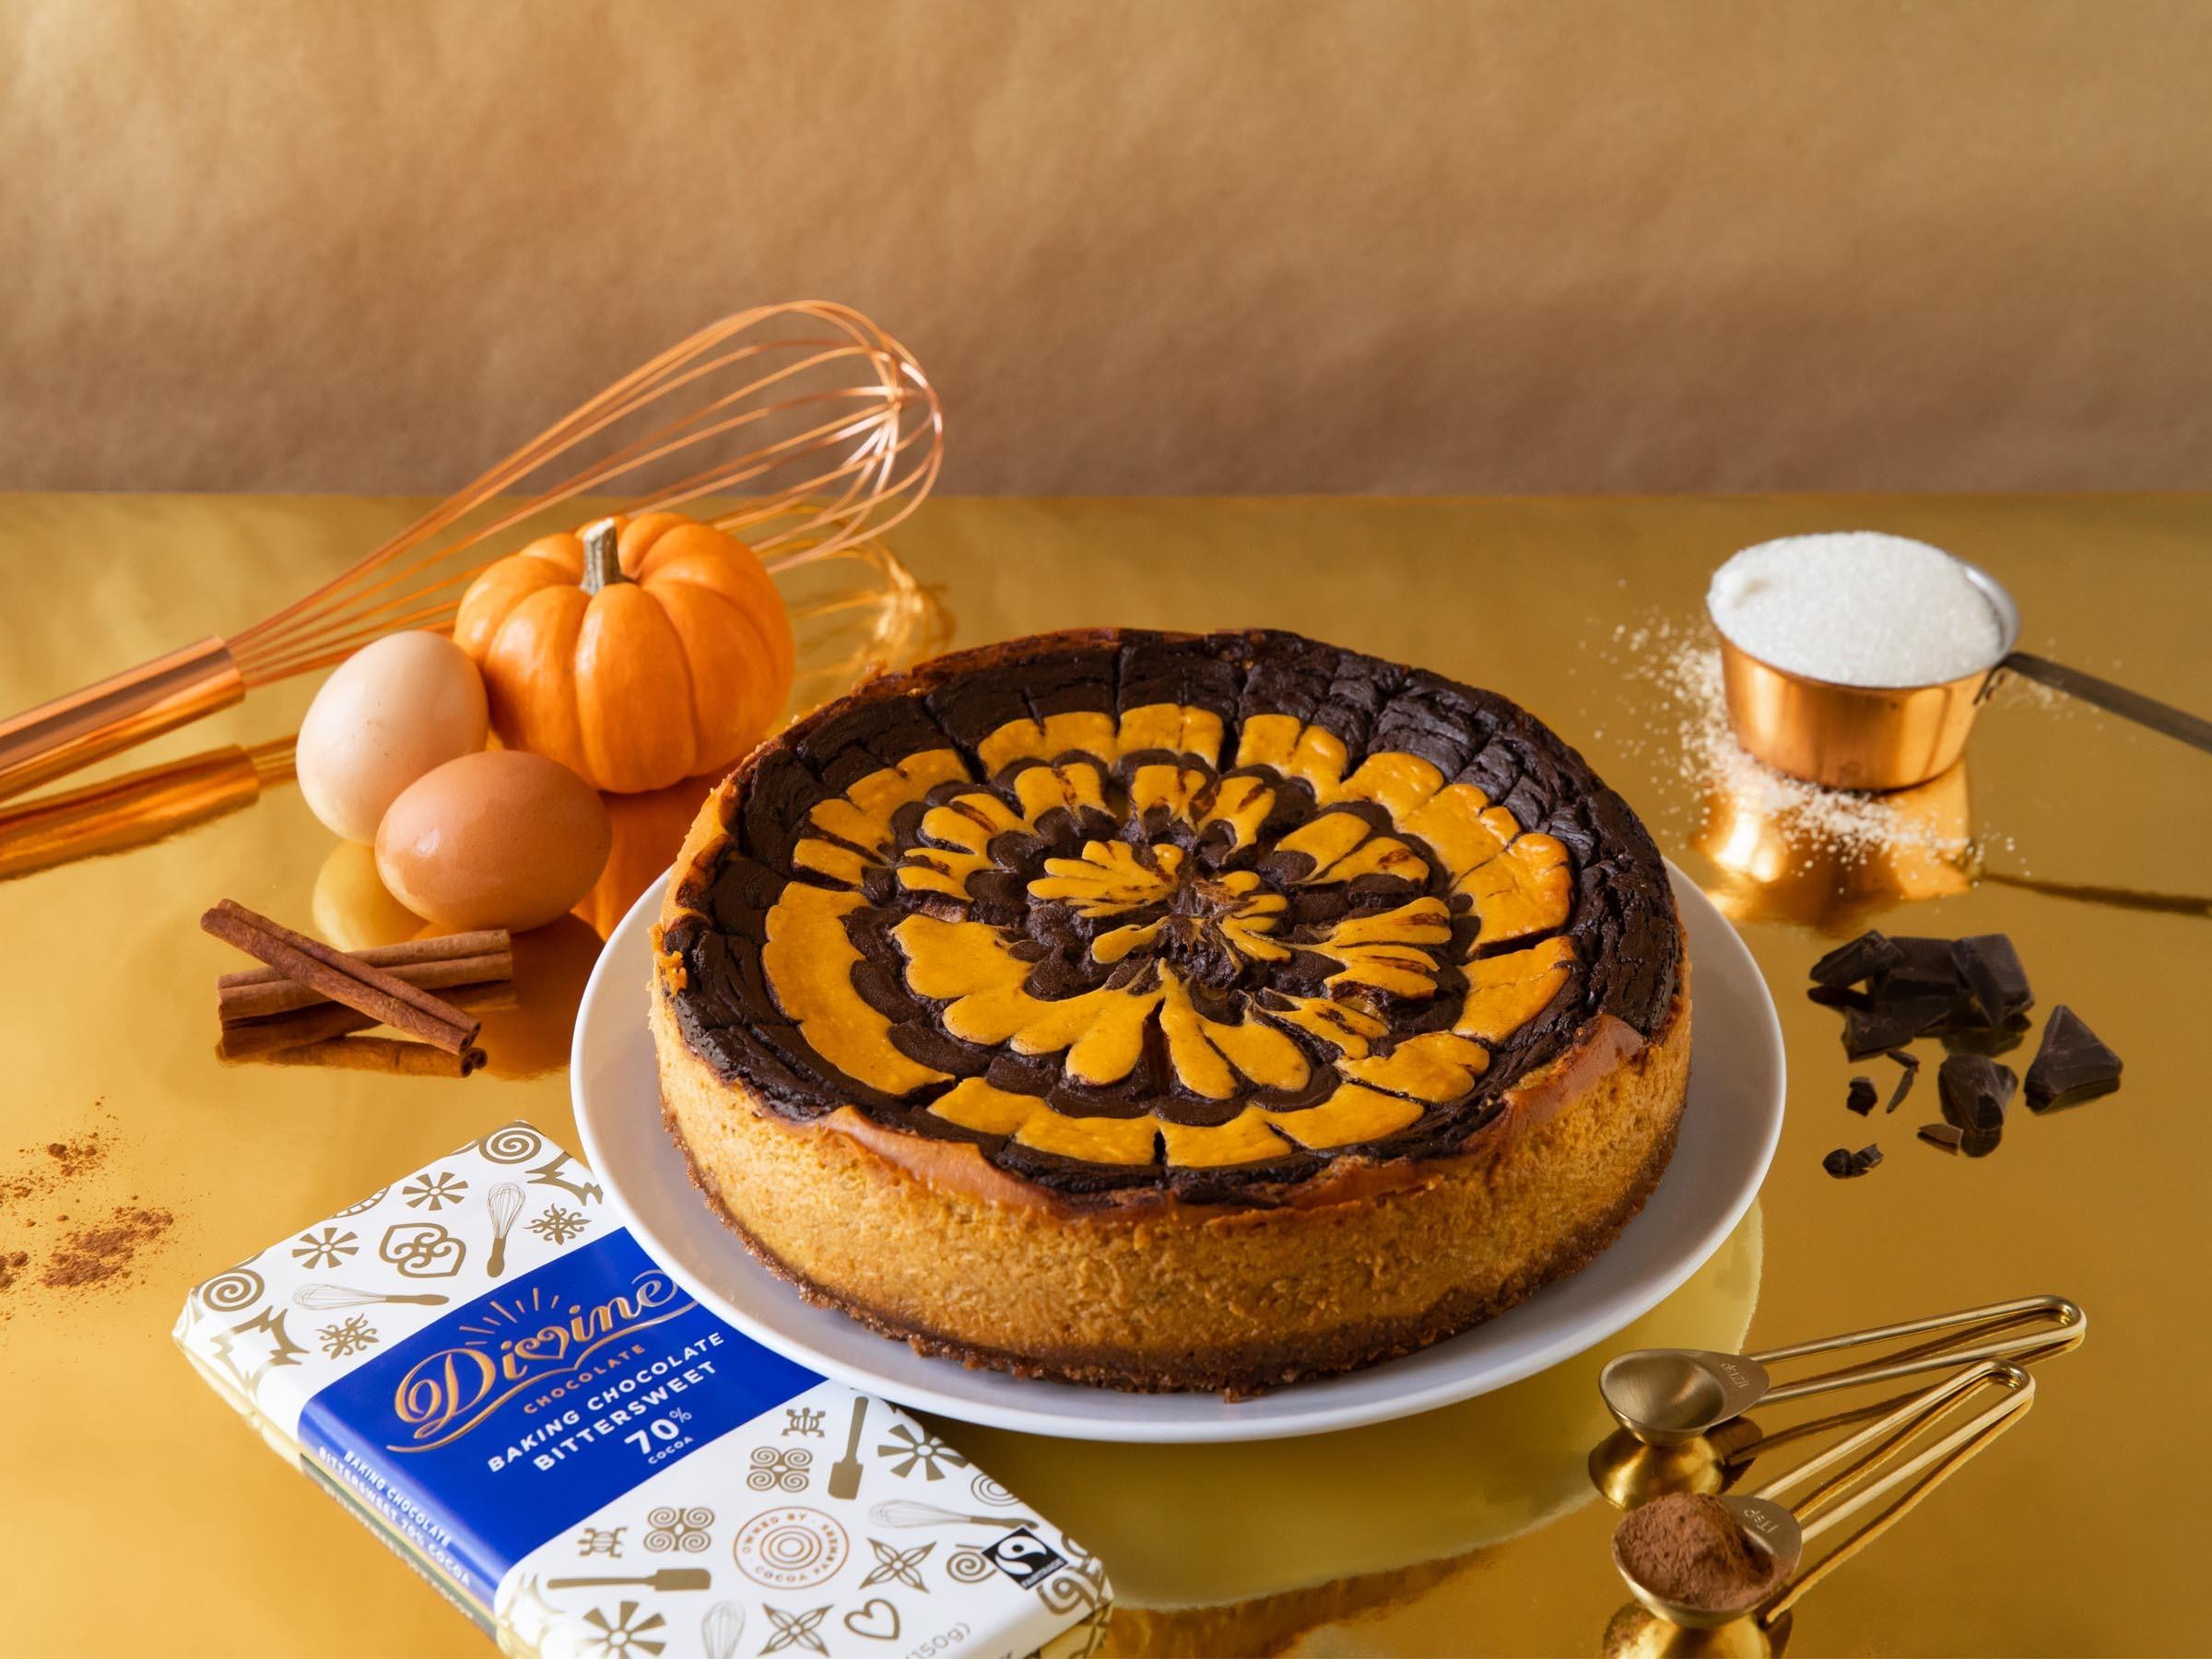 Pumpkin Cheesecake with Chocolate-Stout Ganache Swirl